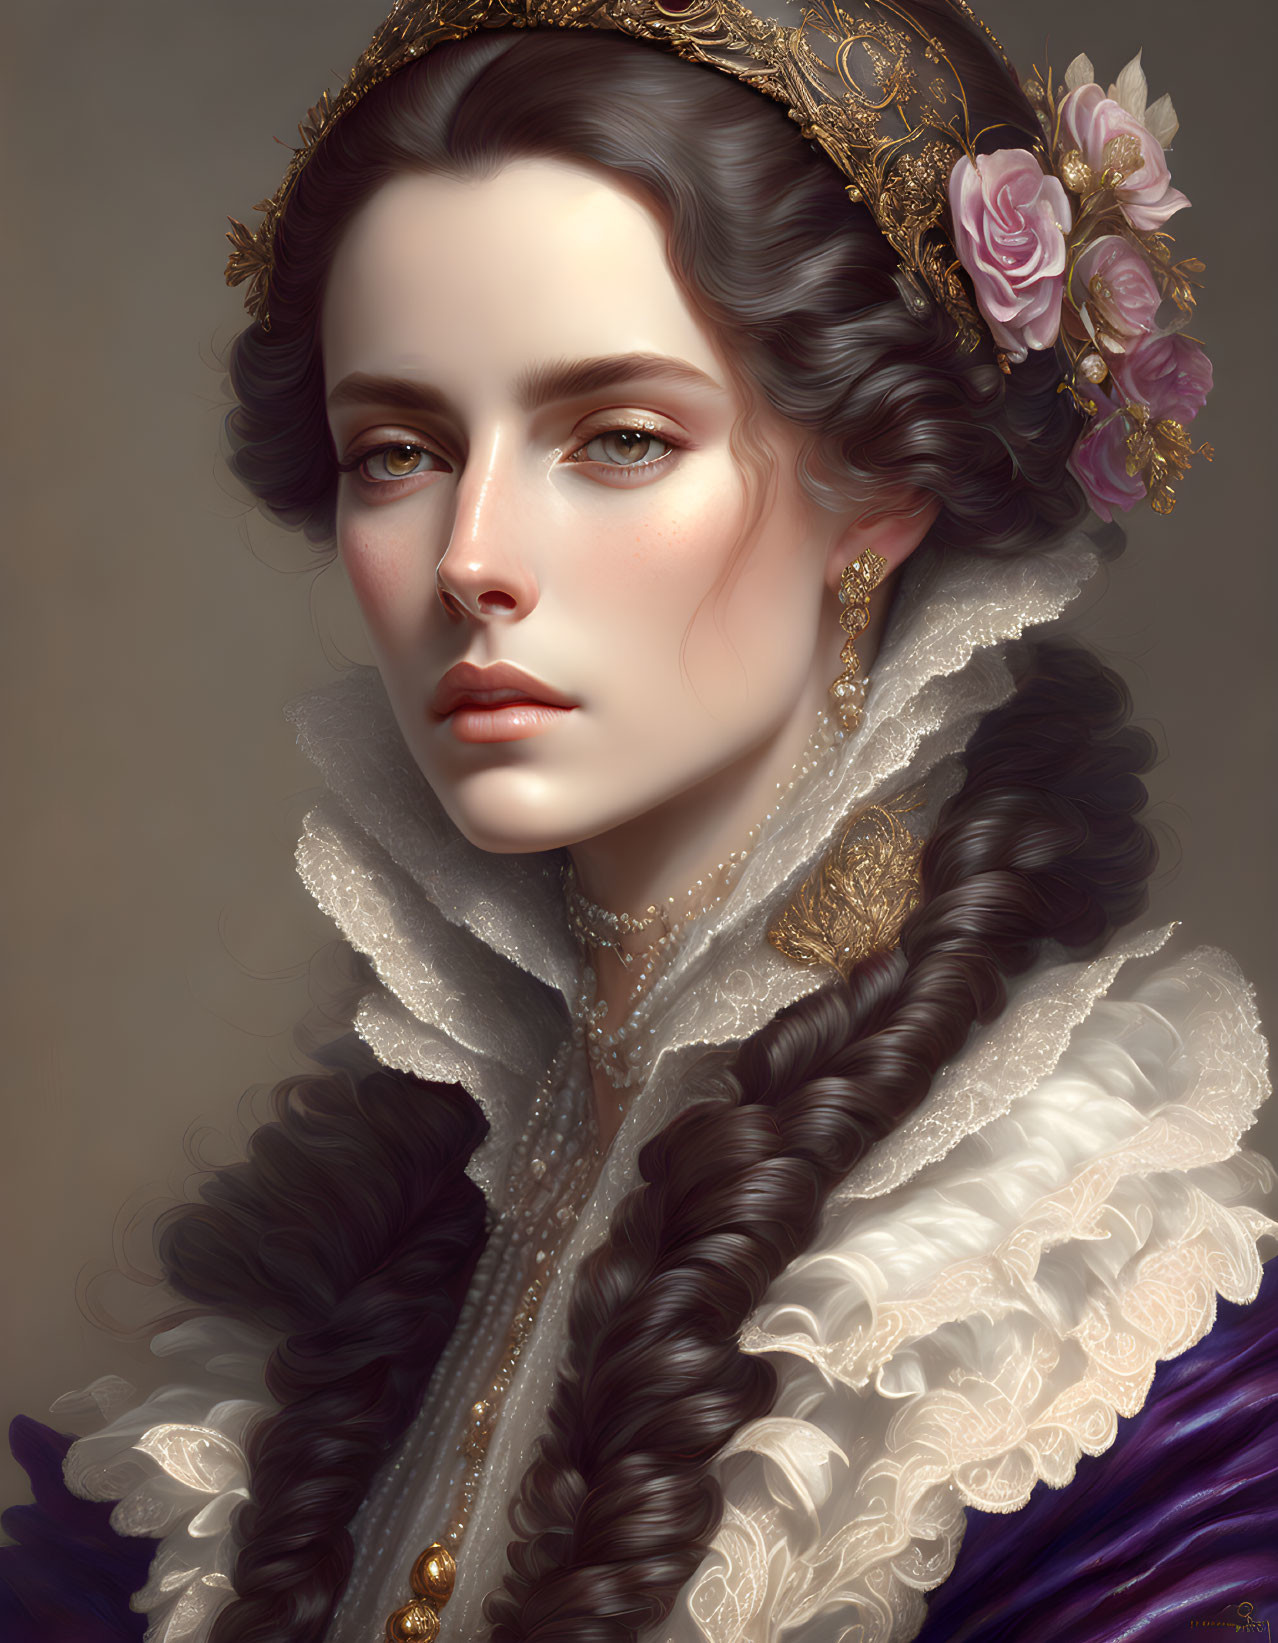 Intricate braids, gold crown, ruffled collar: Woman portrait in purple attire